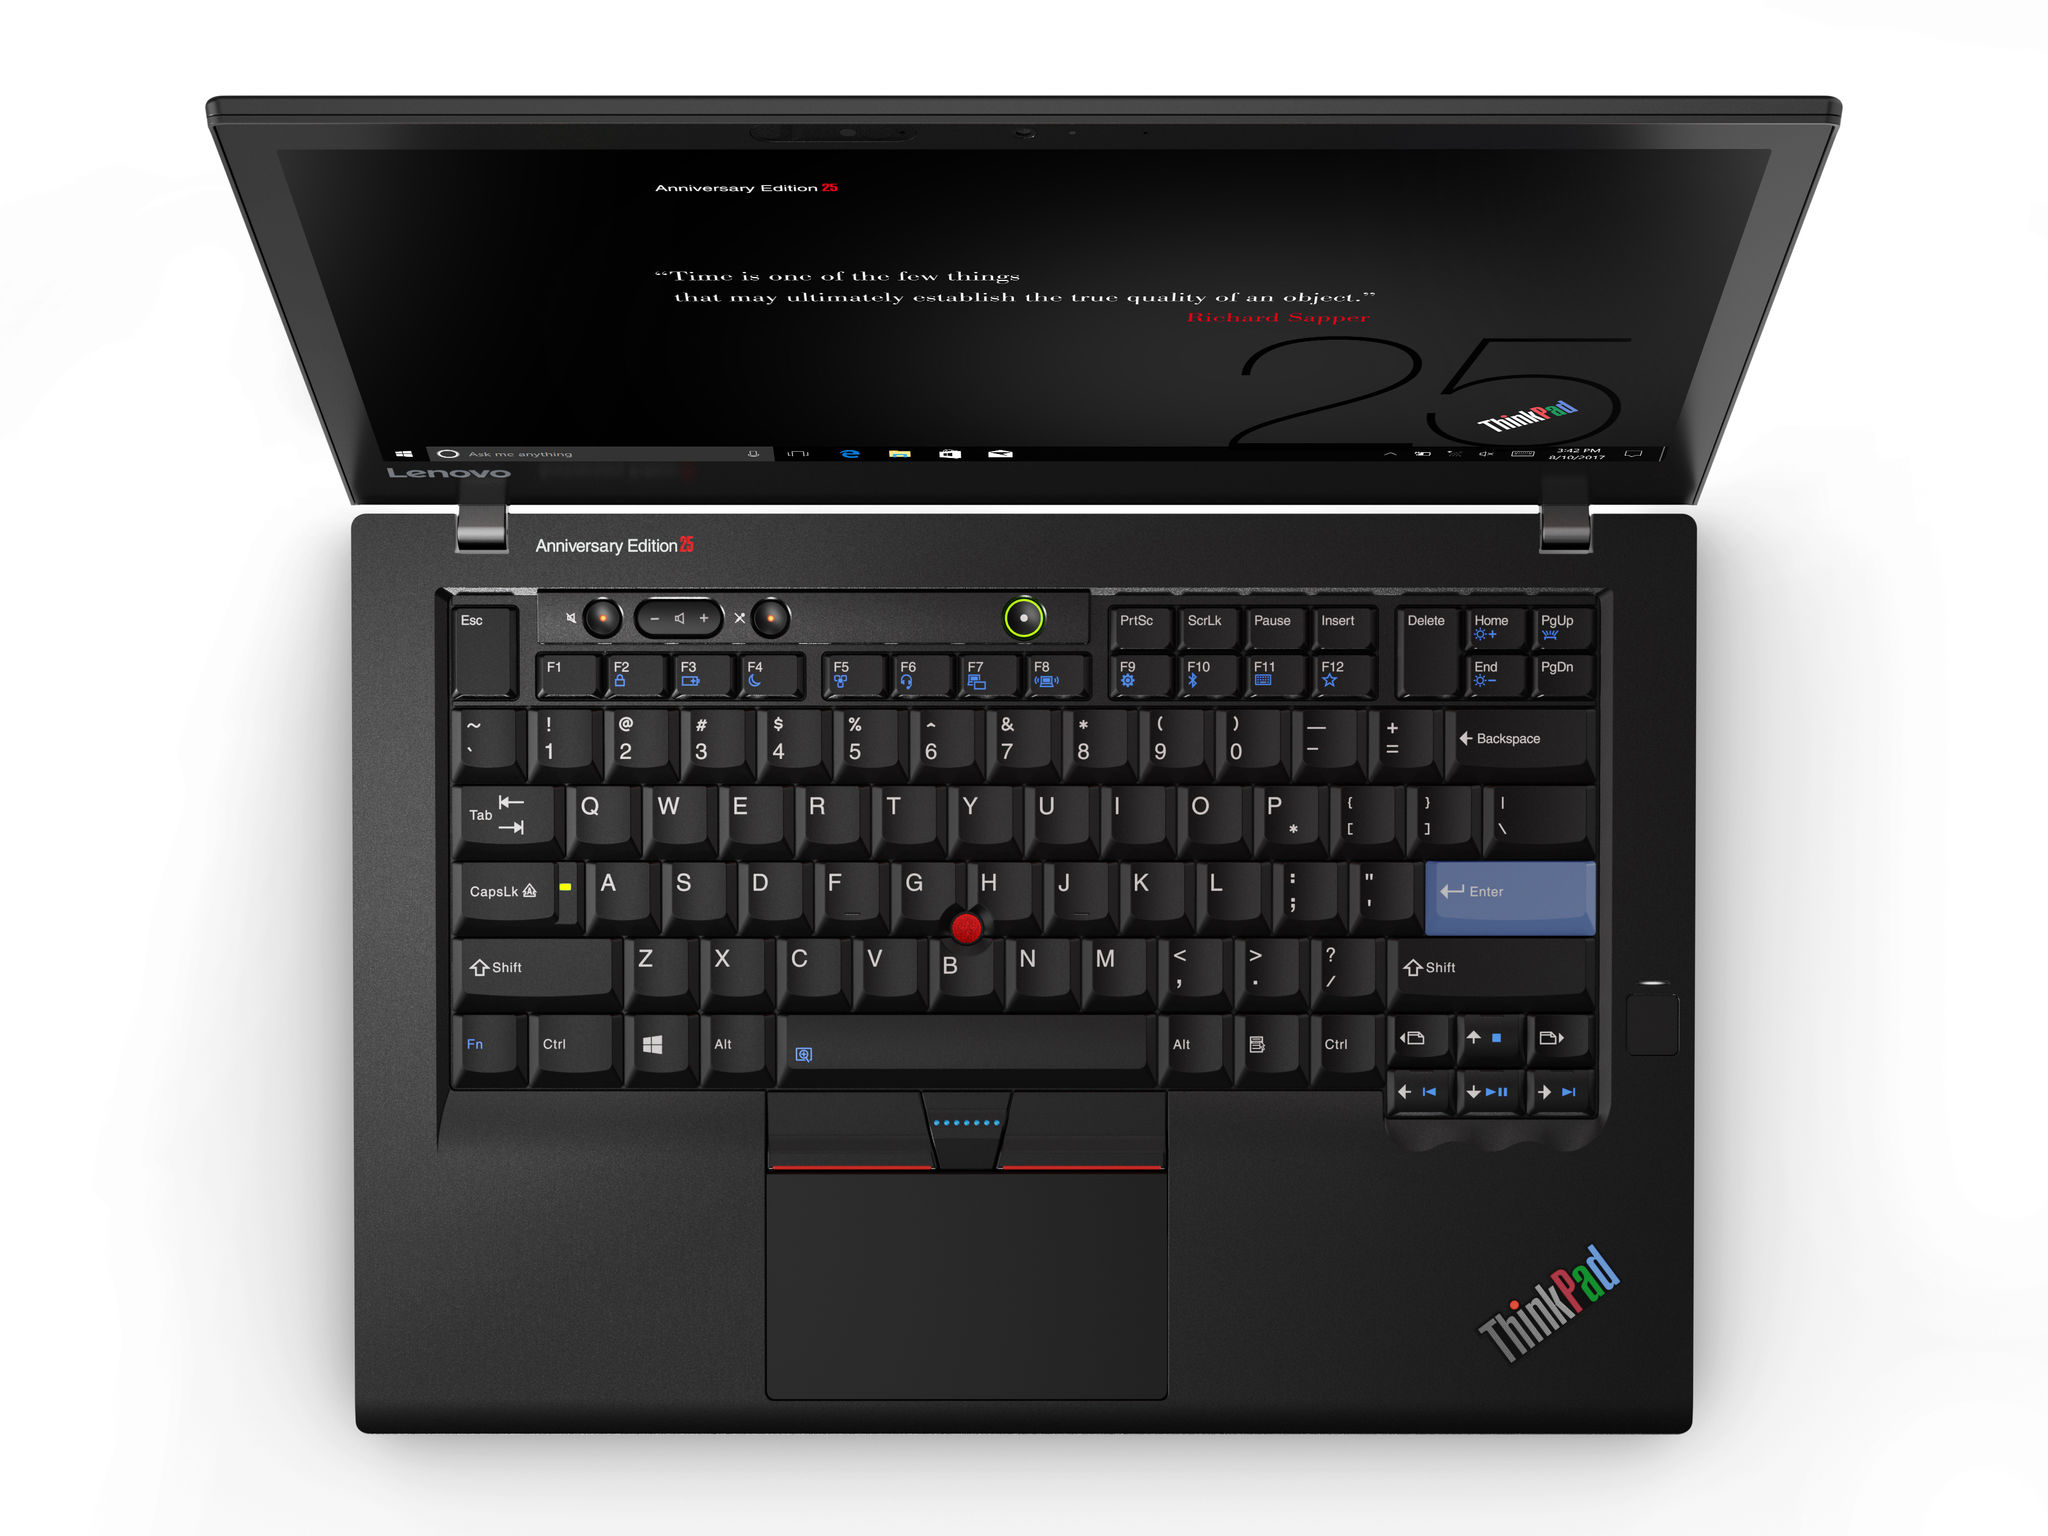 ThinkPad 25 Anniversary